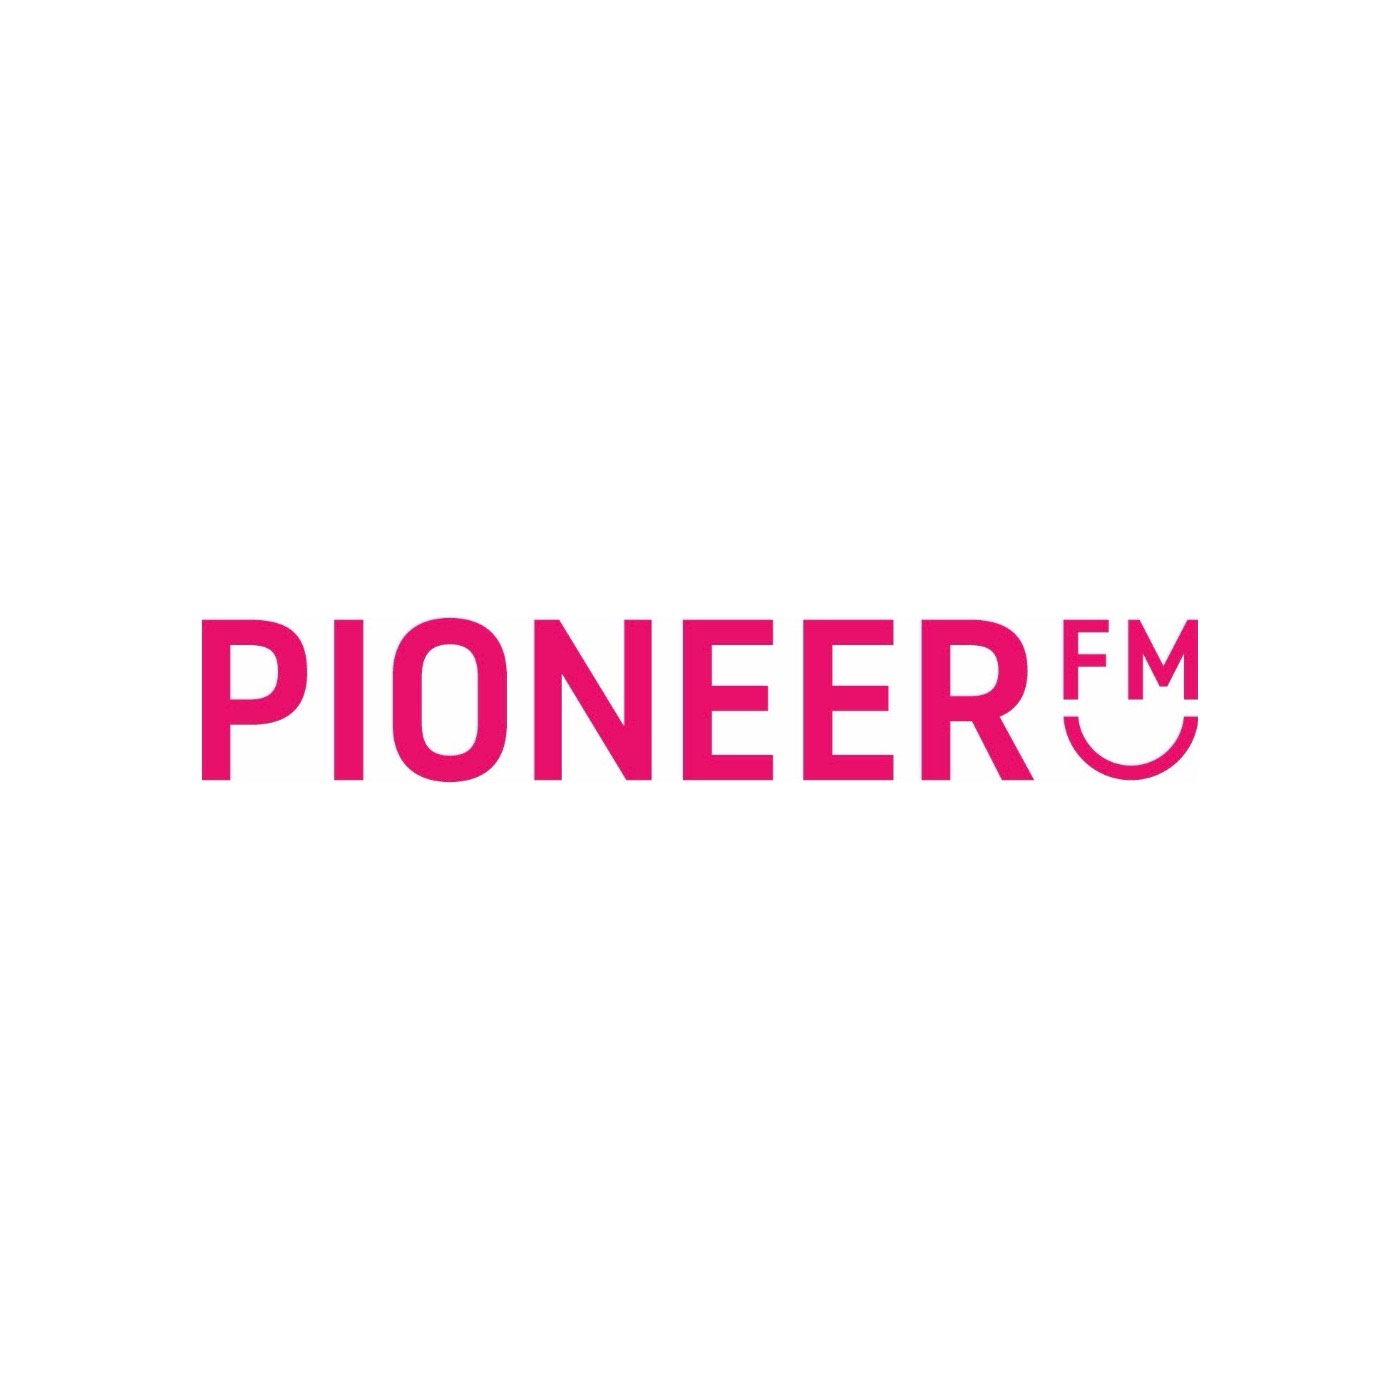 Pioneer FM